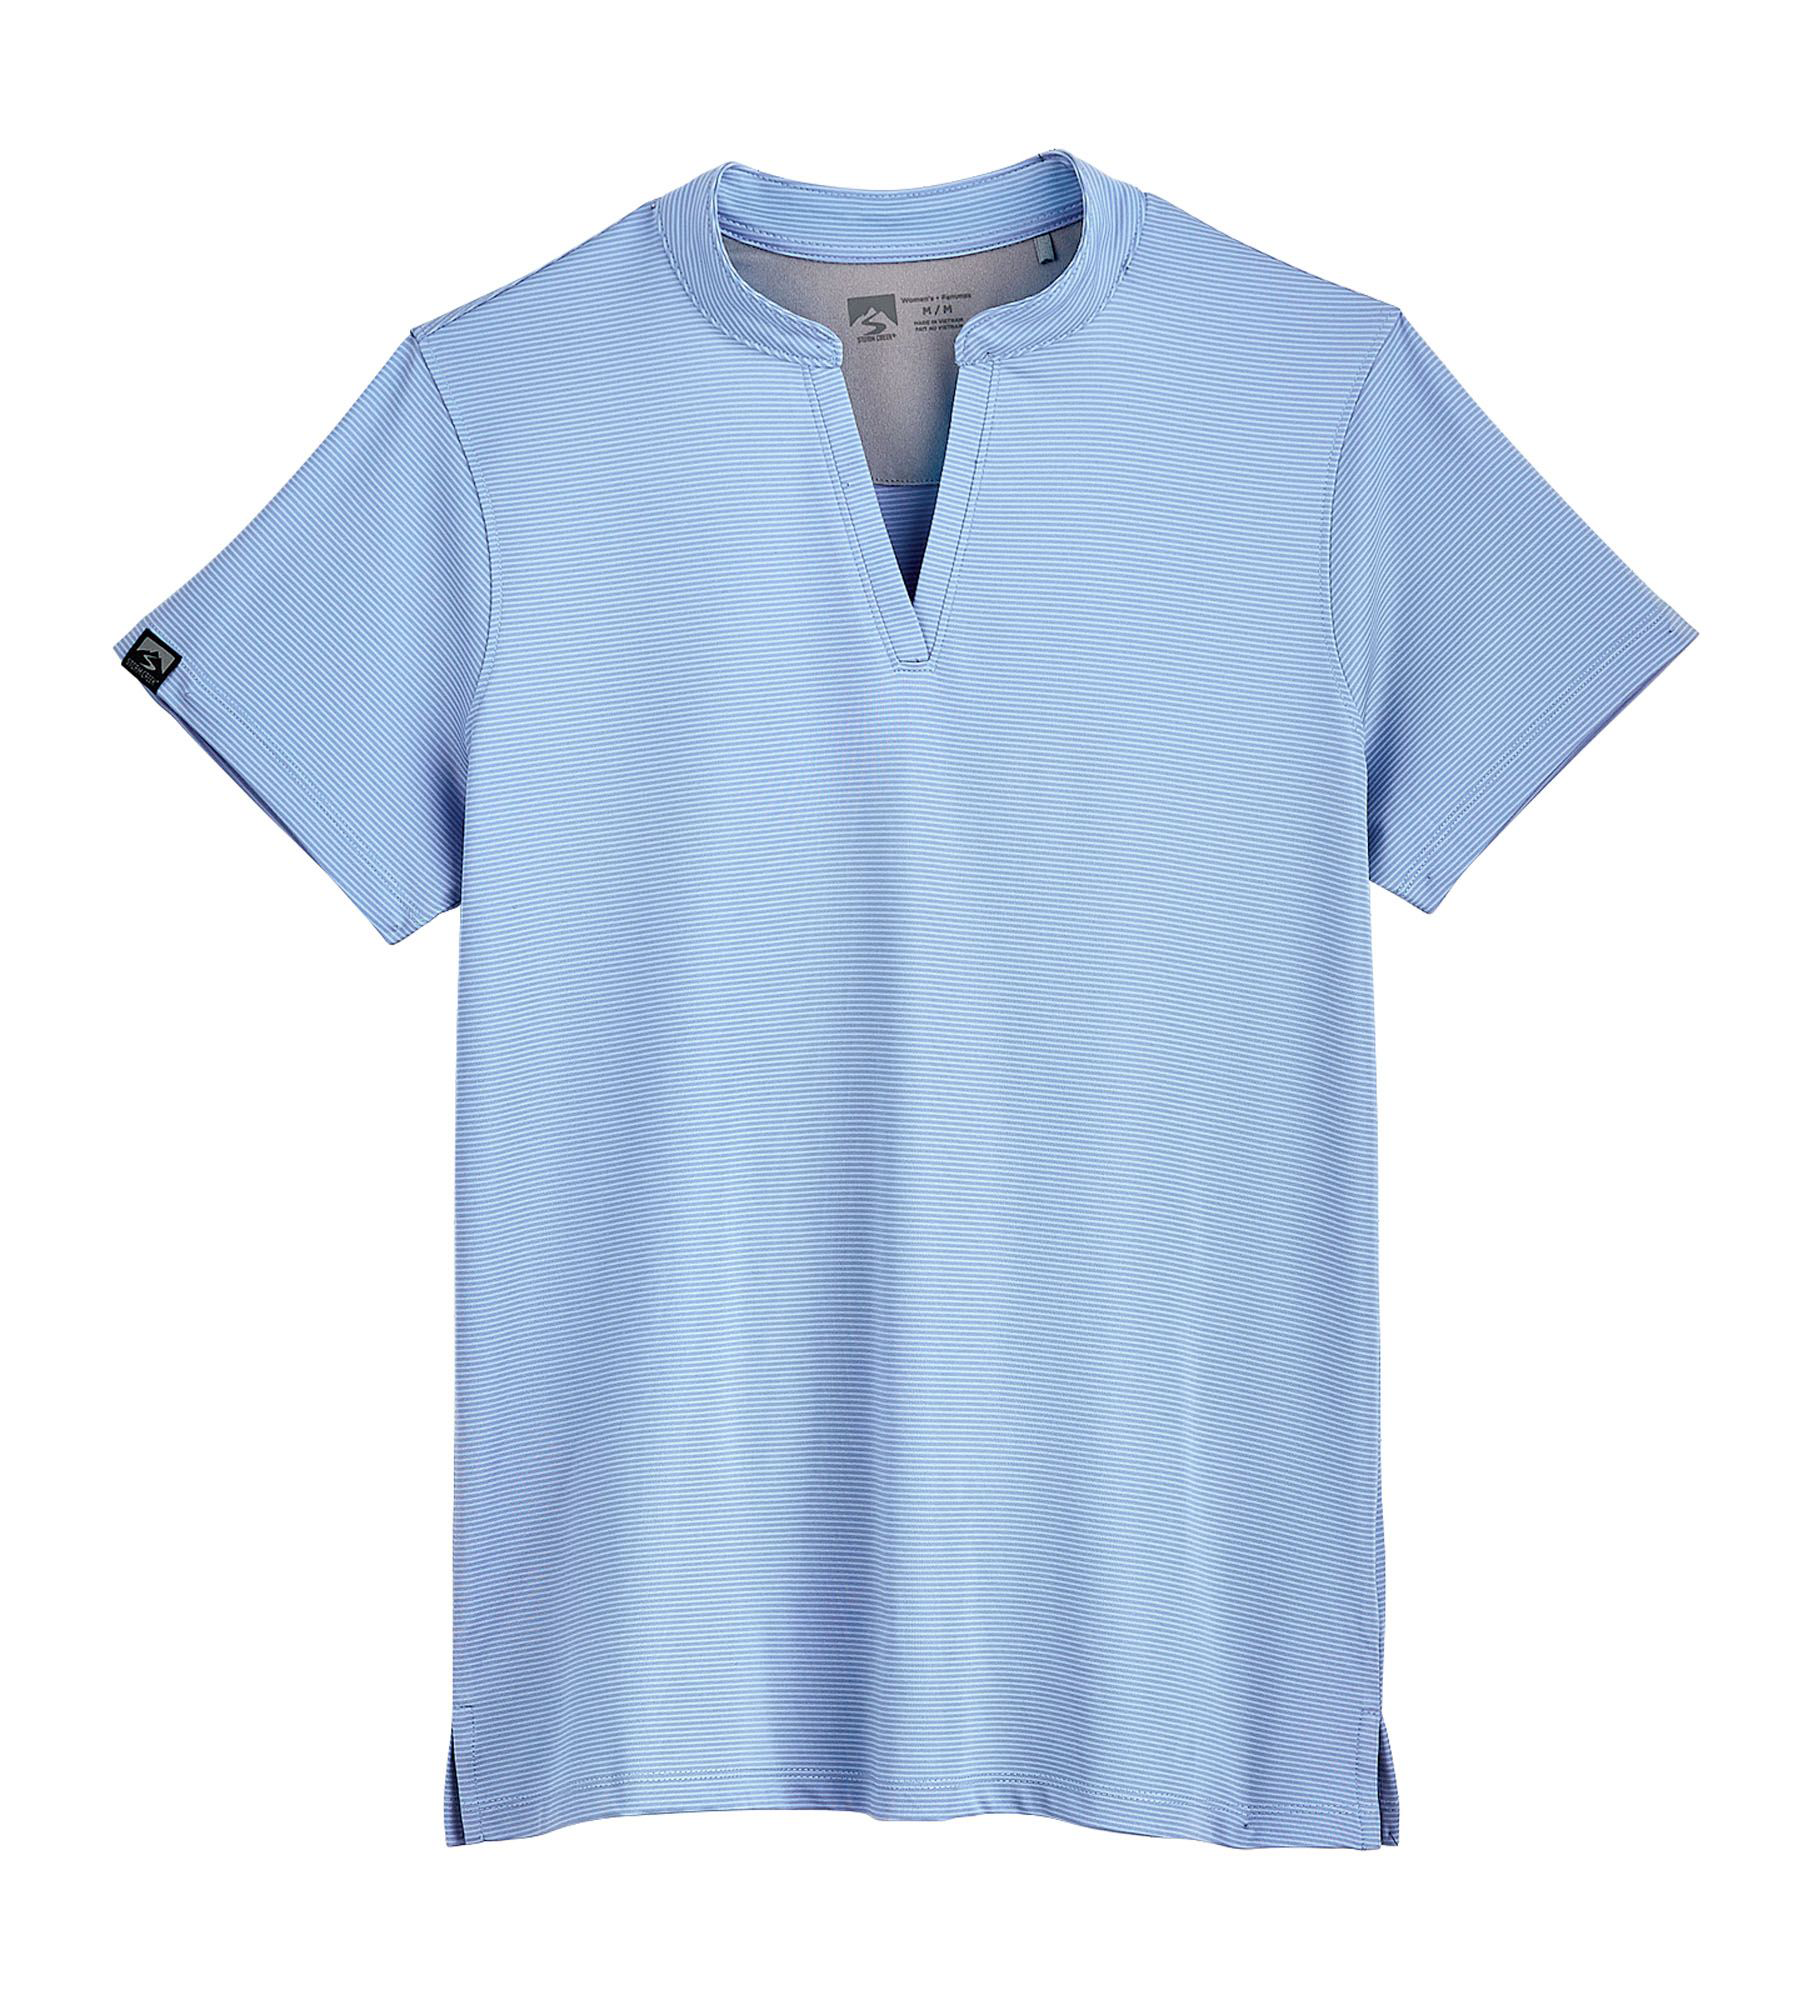 Storm Creek Optimist Short-Sleeve Polo Shirt for Ladies - Peri Blue - XL